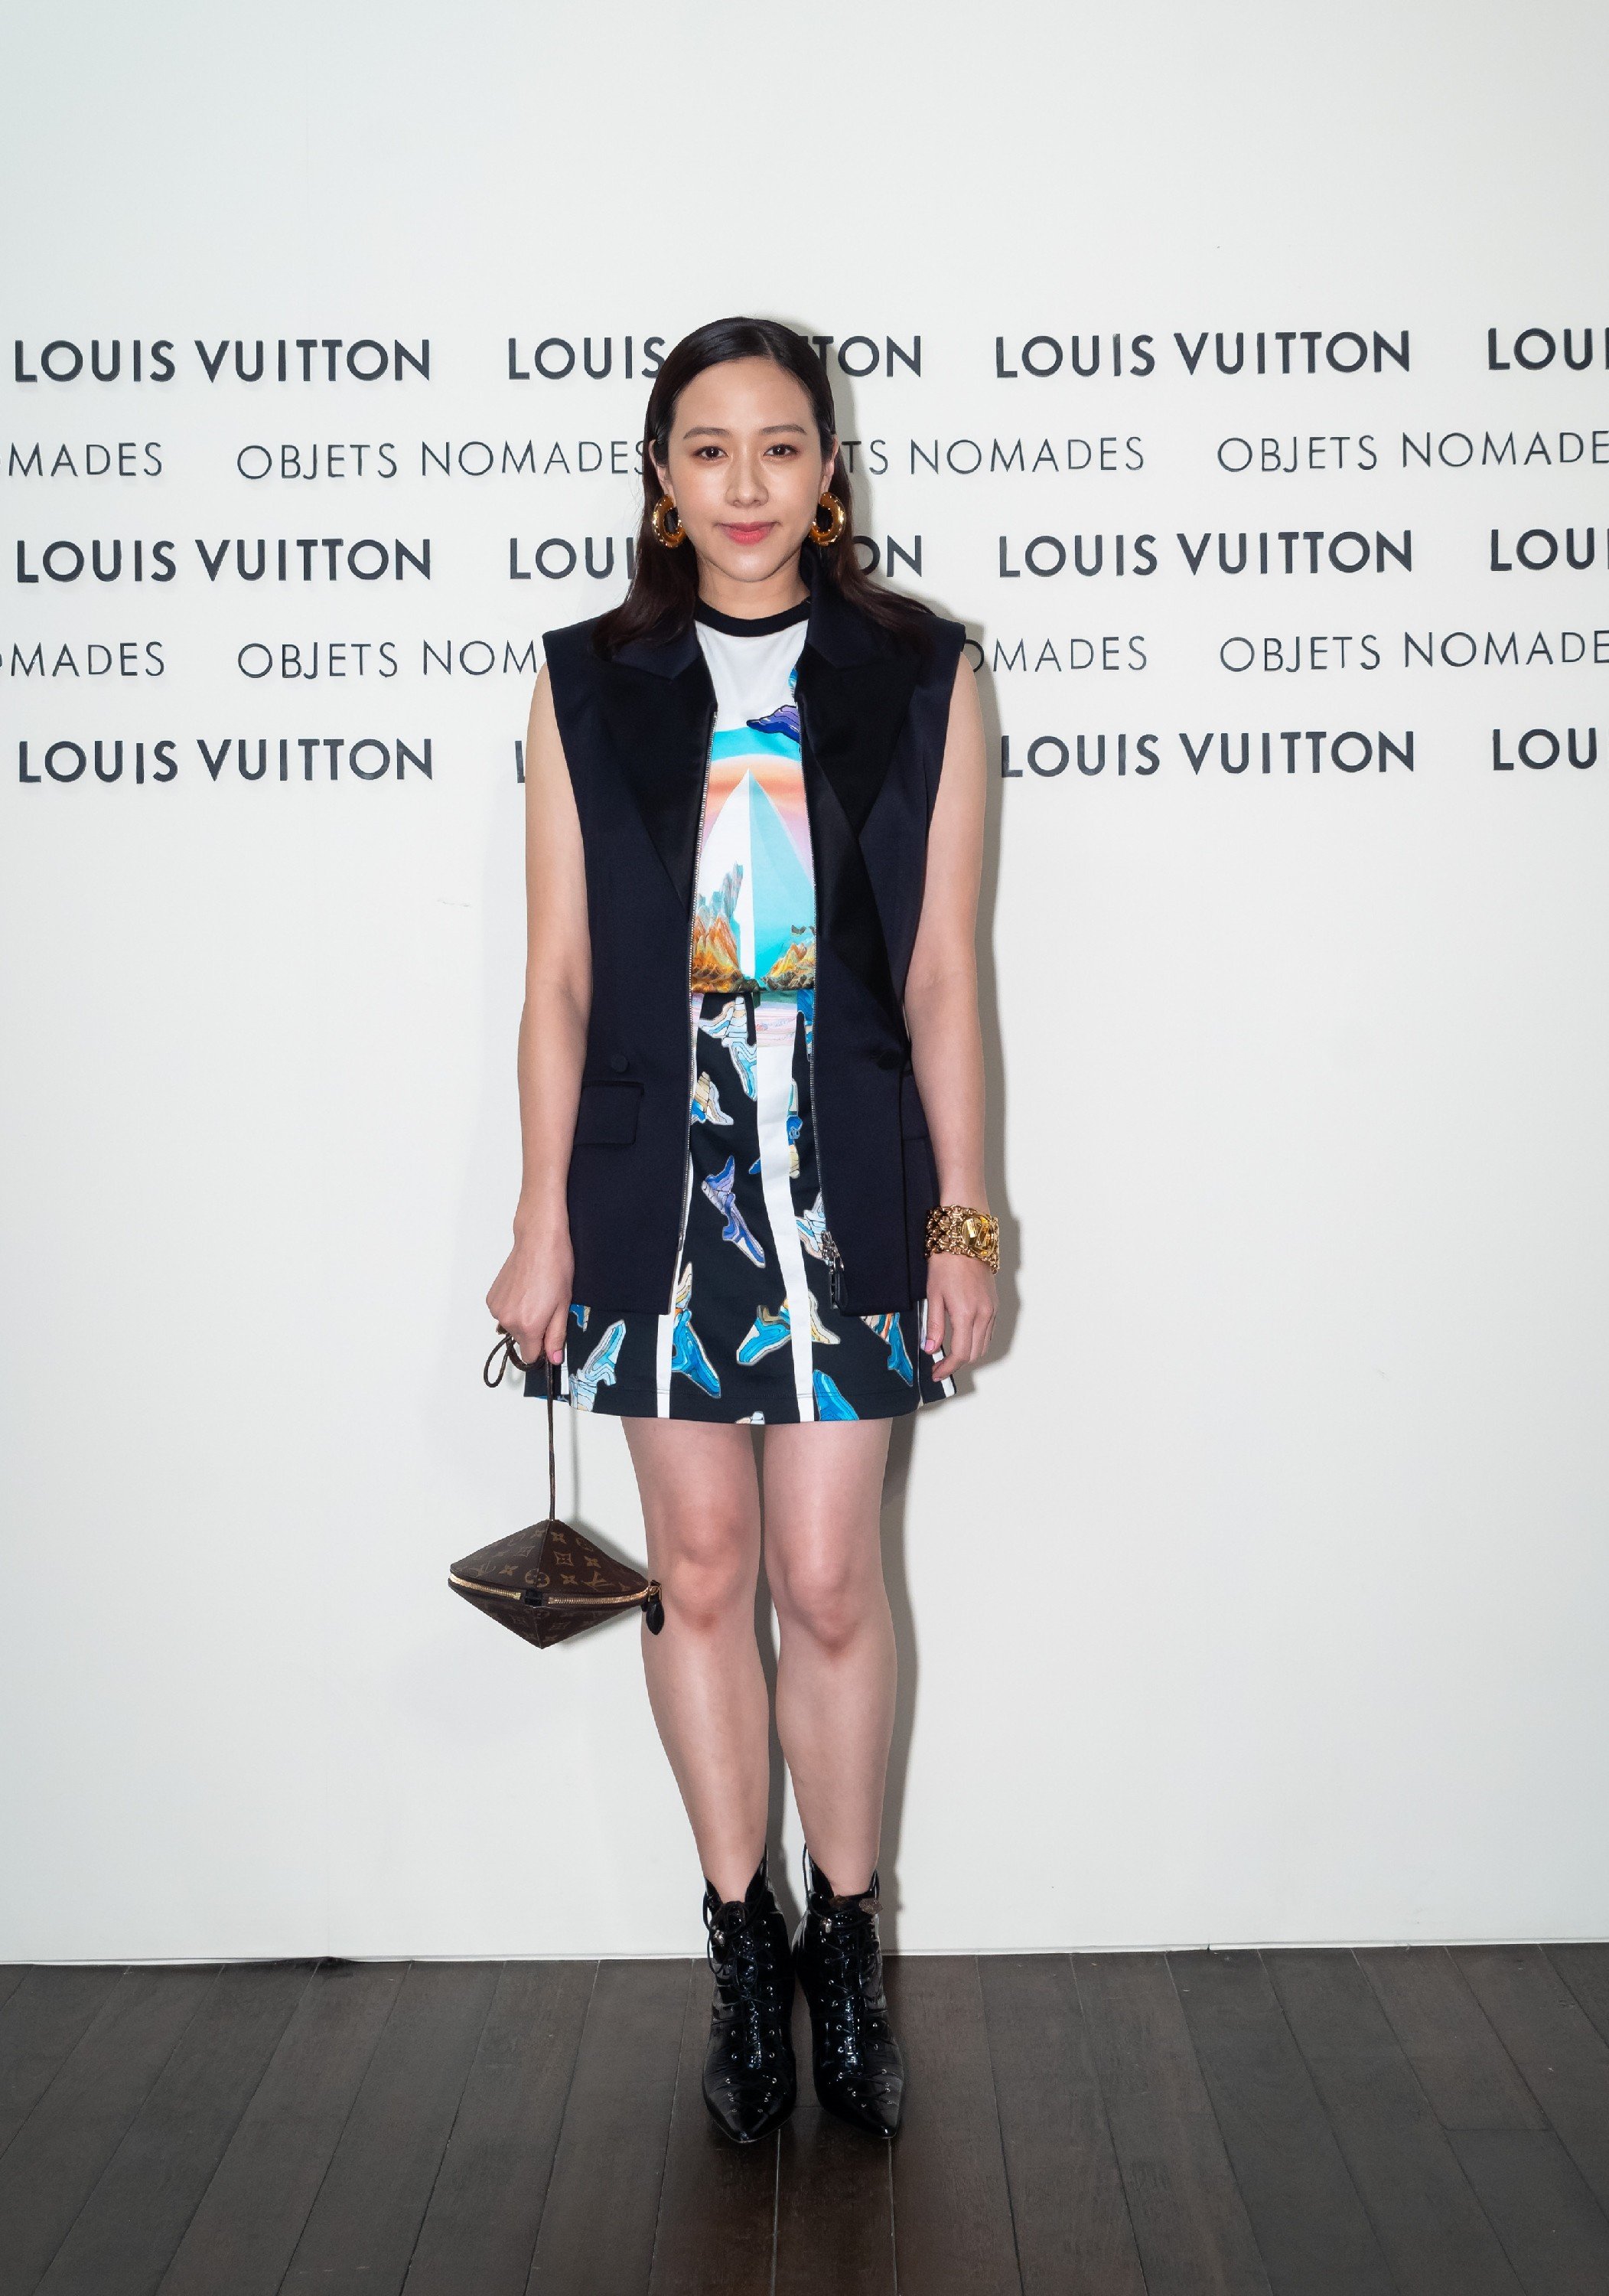 Louis Vuitton Event Celebrating Objets Nomades